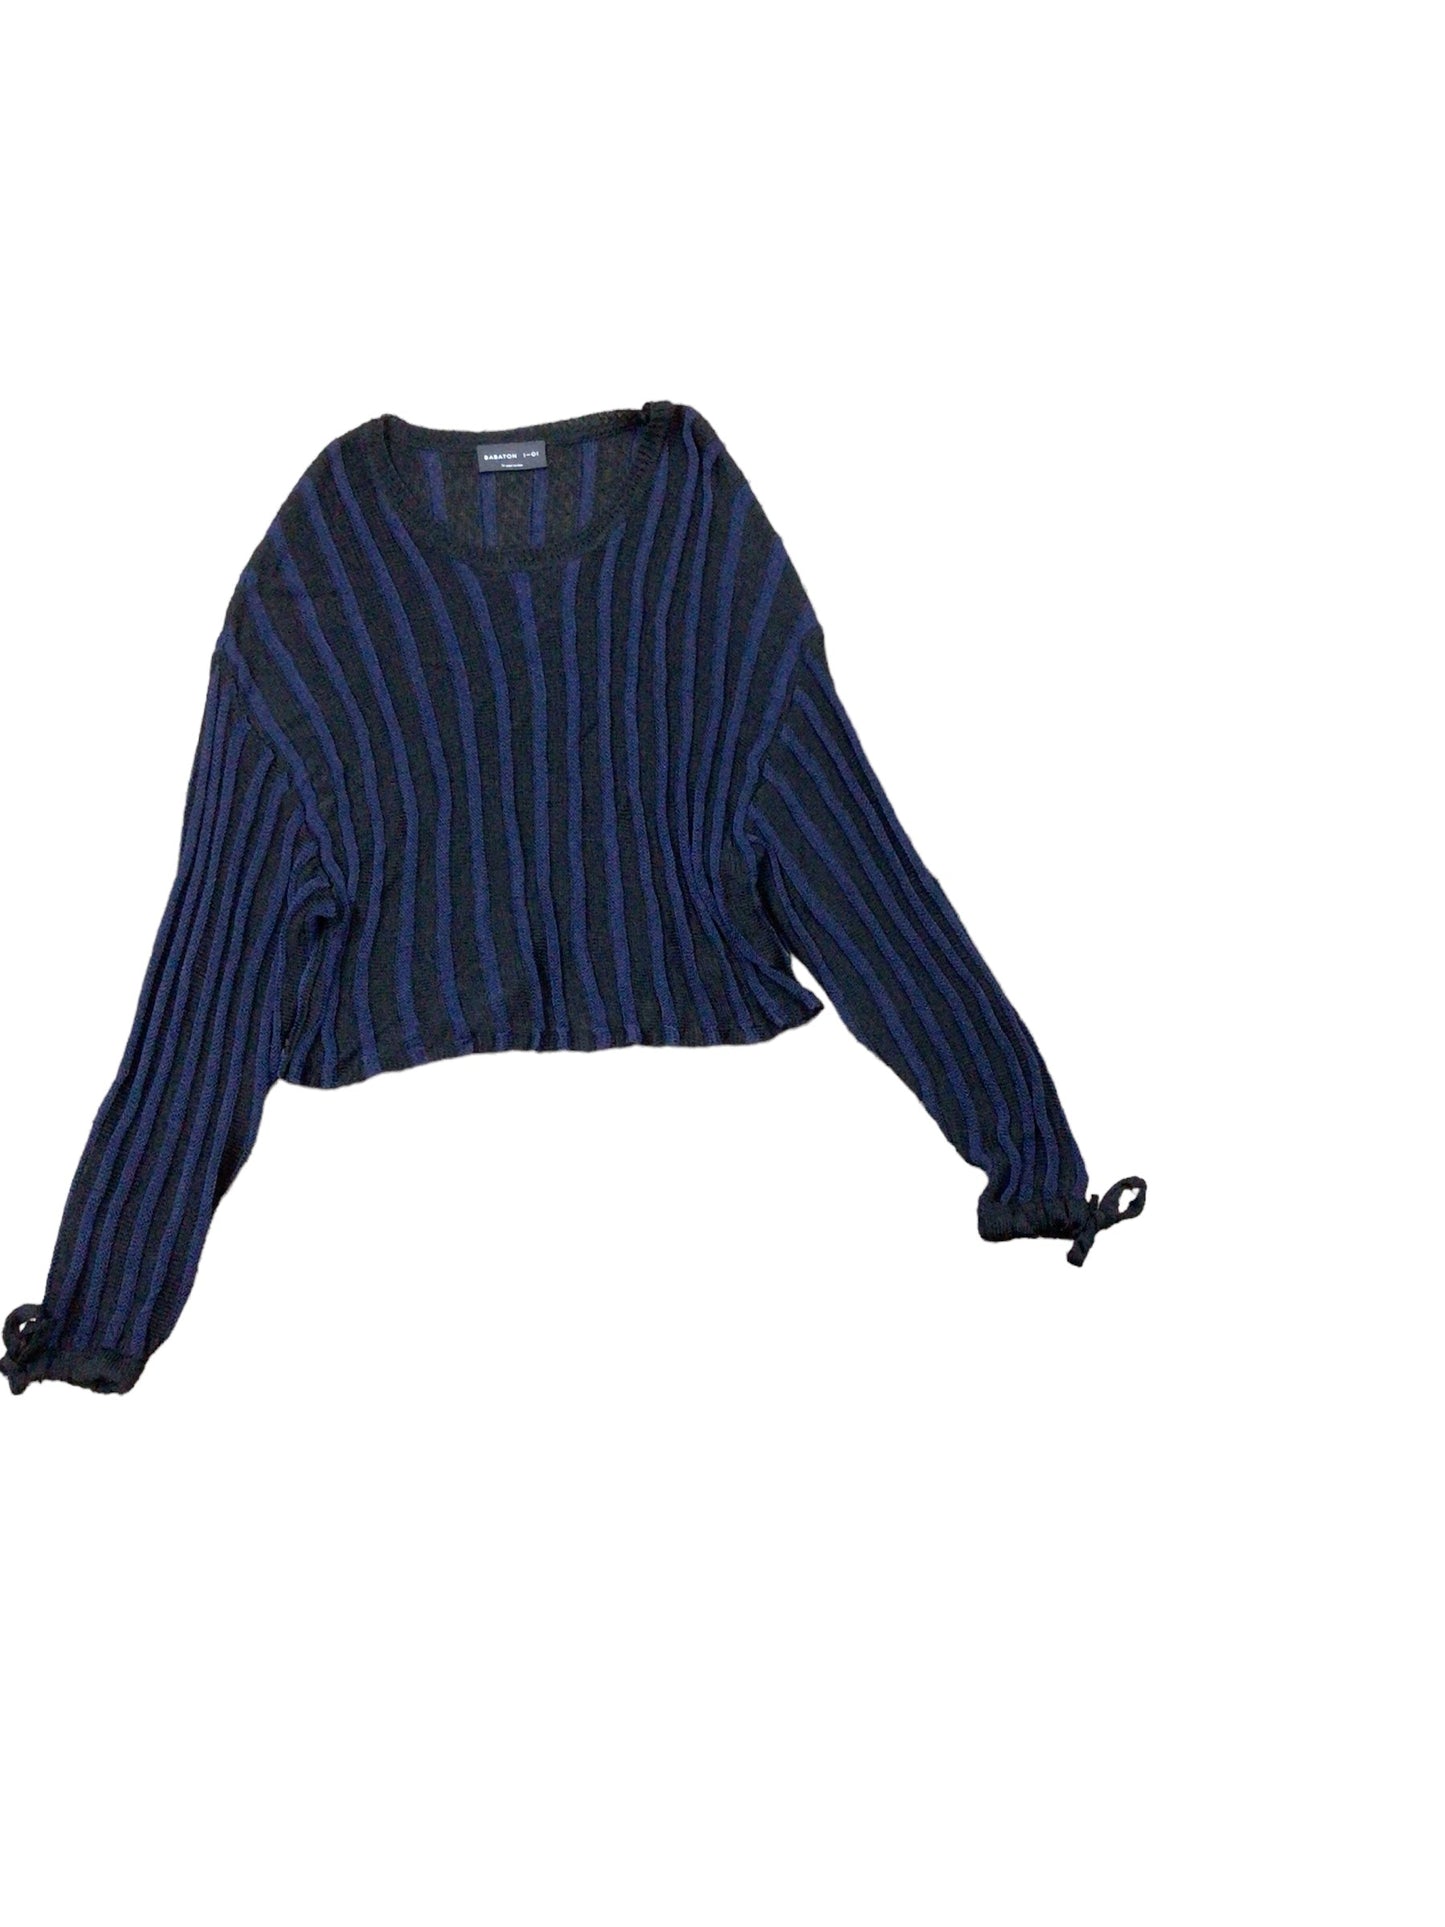 Sweater By Babaton  Size: M